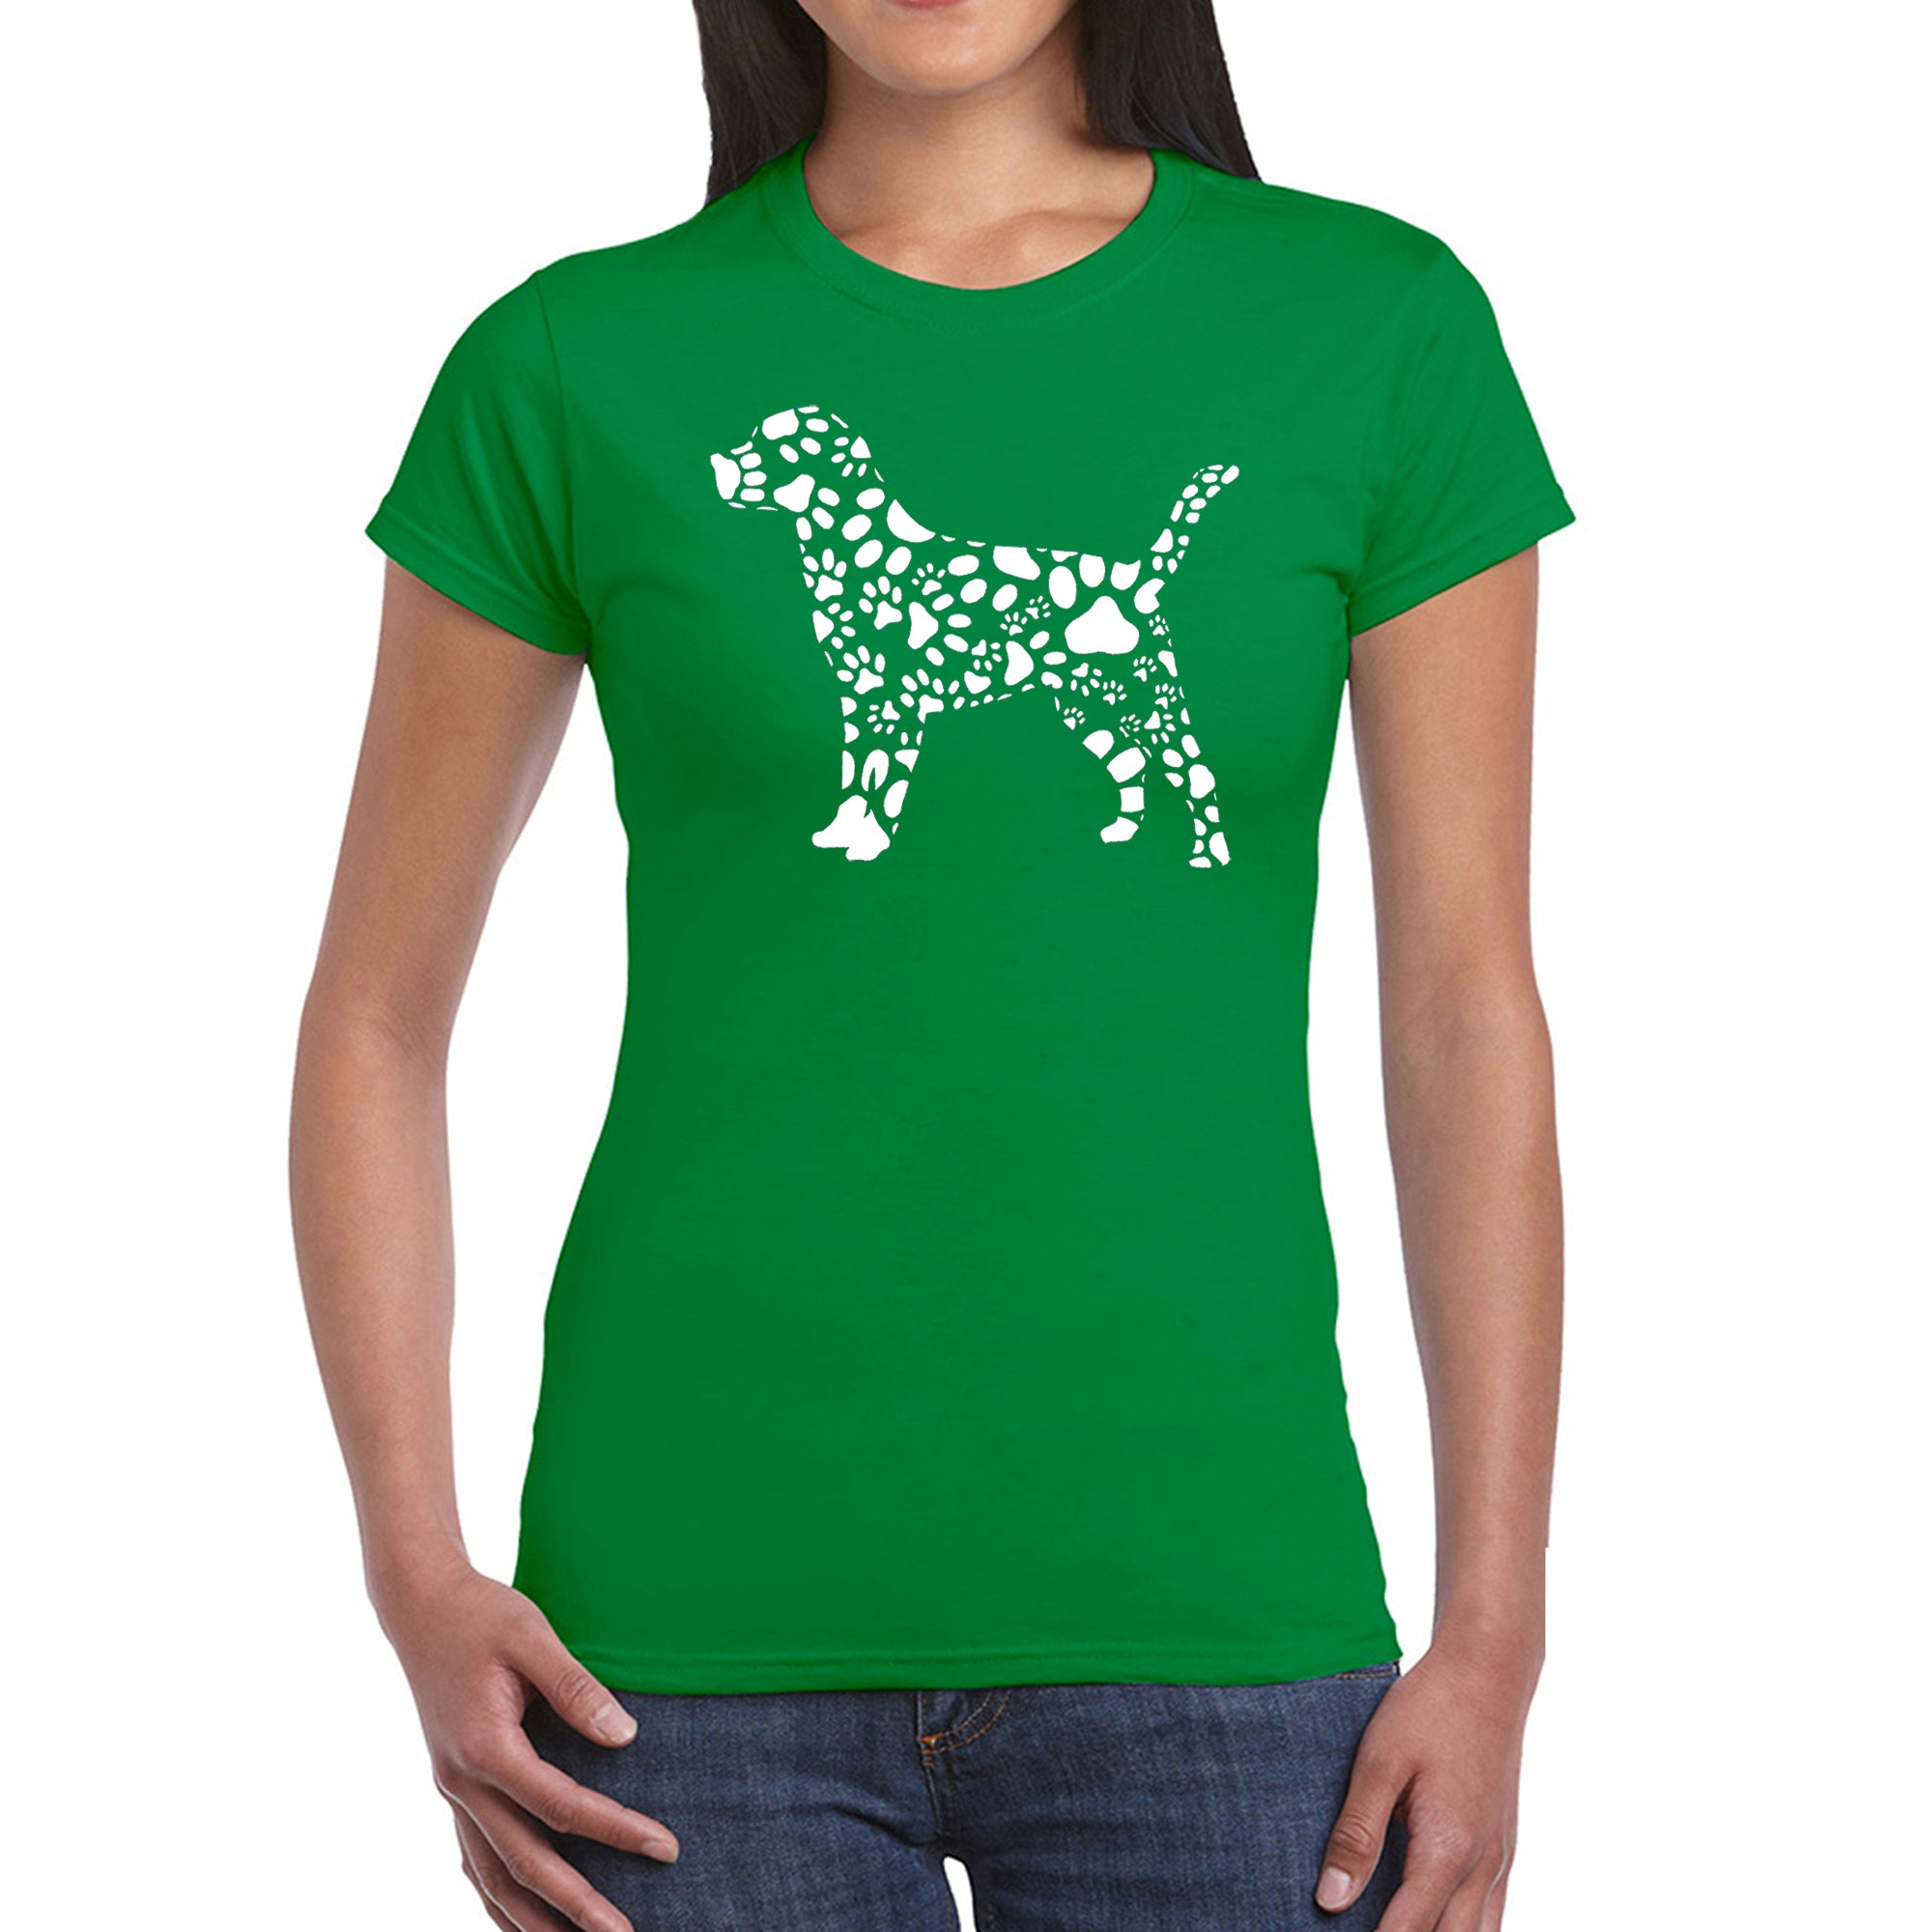 Dog Paw Prints - Women's Word Art T-Shirt - Kelly - Large